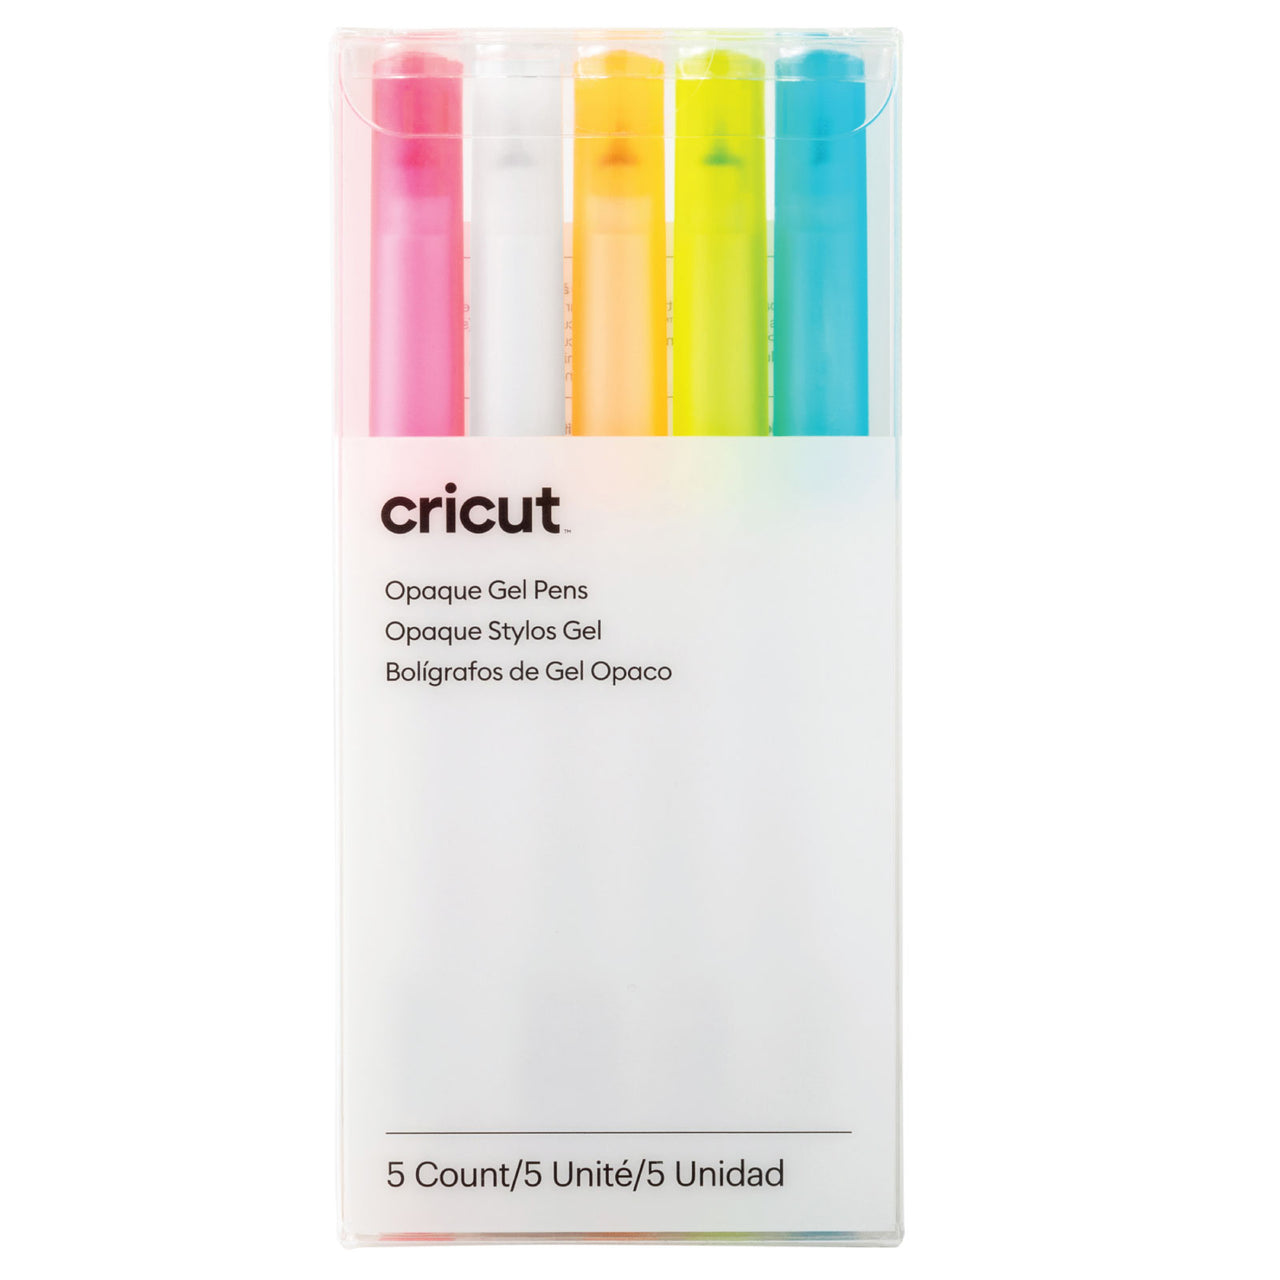 Cricut Opaque Gel Pens 1.0 mm - Pink, White, Orange, Yellow, Blue (5 ct) - Damaged Package